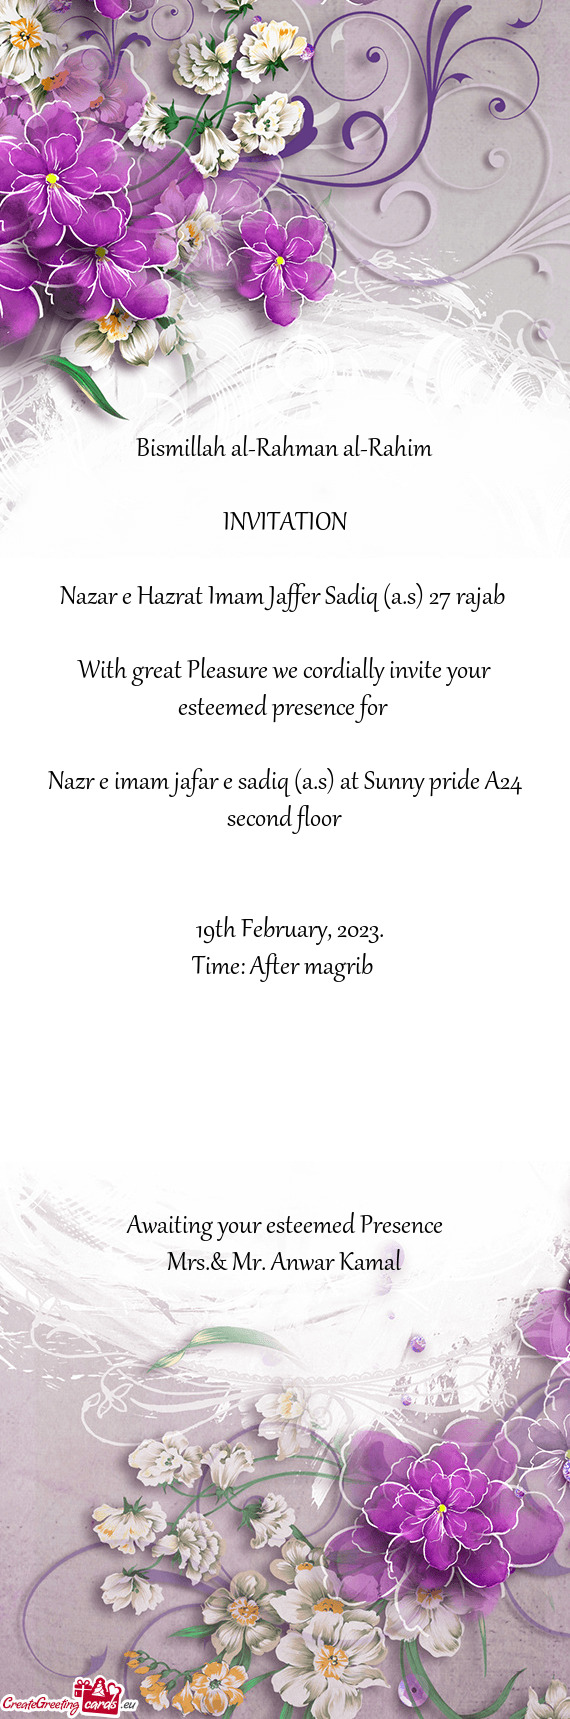 Nazar e Hazrat Imam Jaffer Sadiq (a.s) 27 rajab